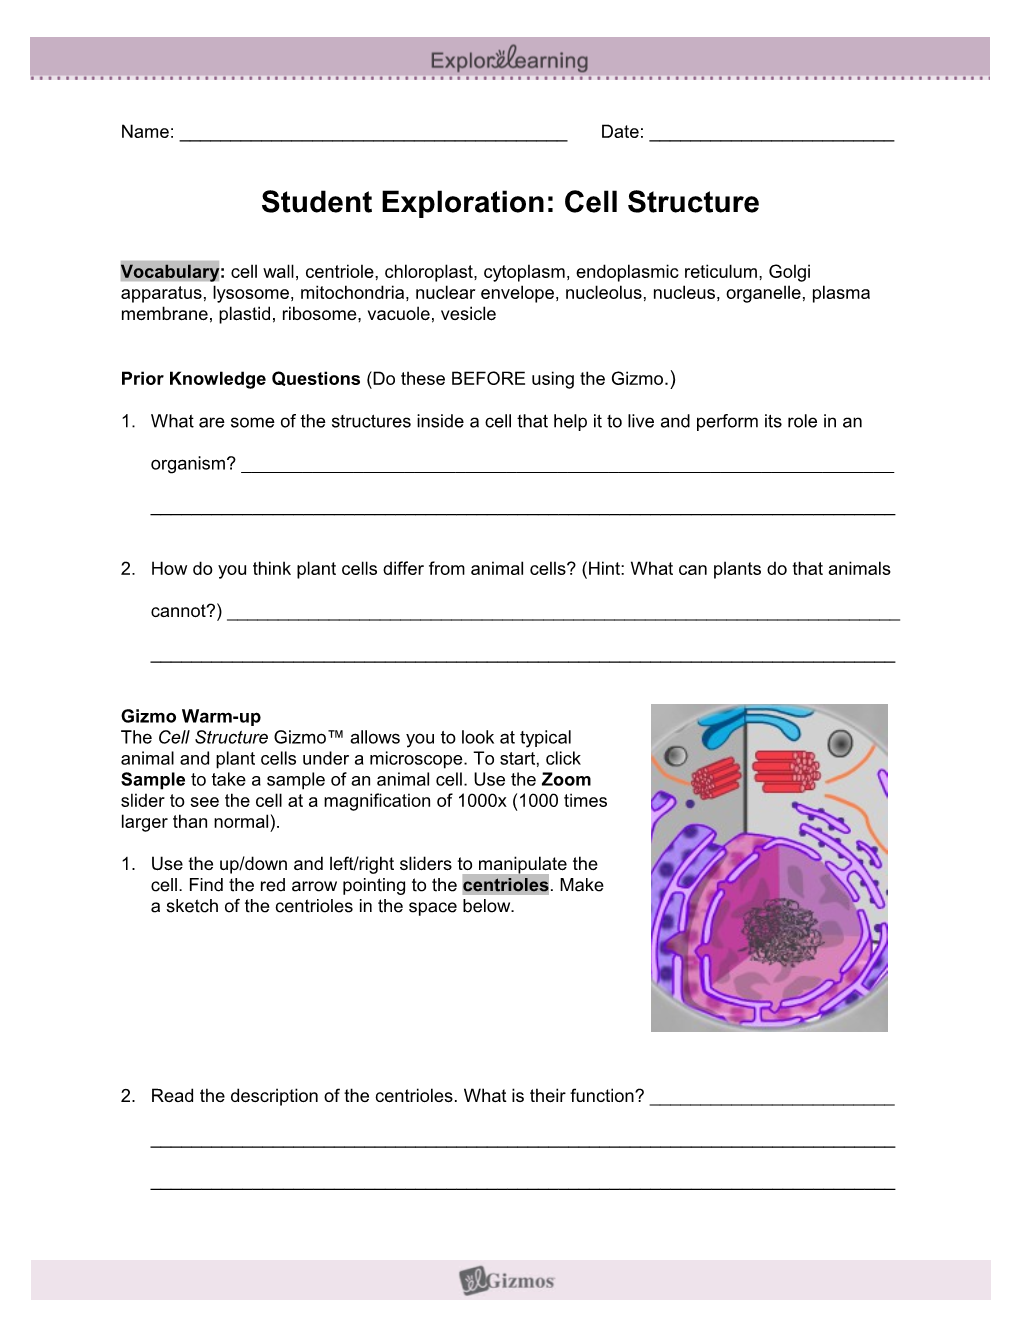 Student Exploration Sheet: Growing Plants s13